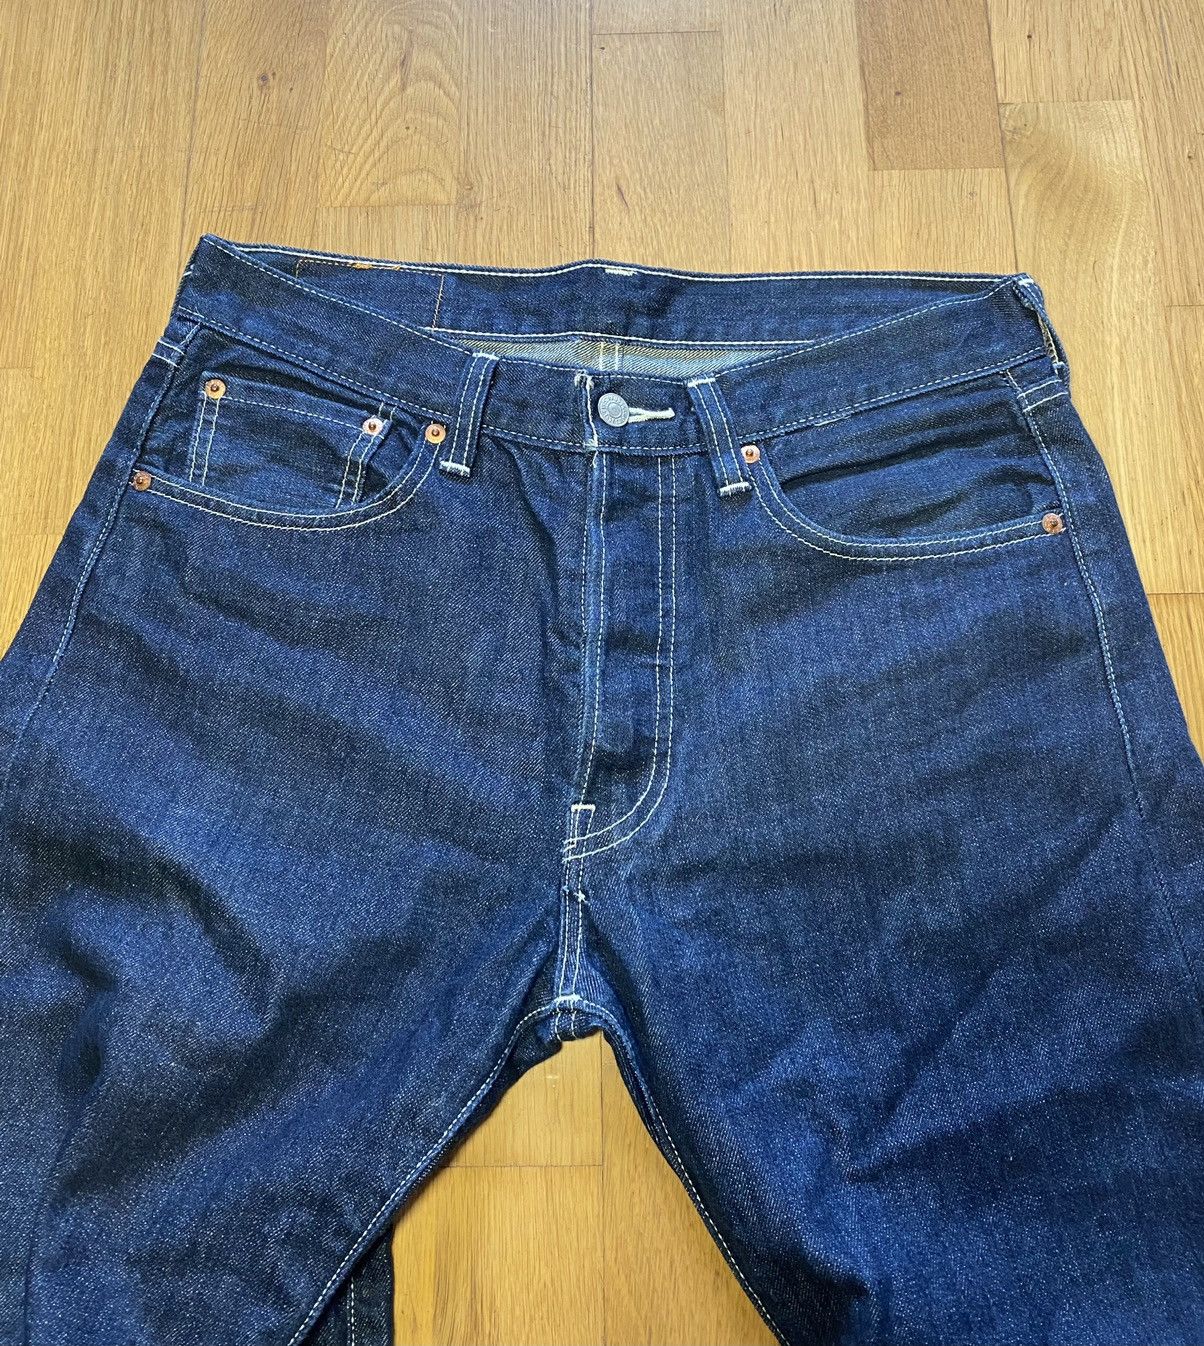 Levi's Levi’s strauss jeans 501 size 32 x 32 Size US 32 / EU 48 - 5 Thumbnail